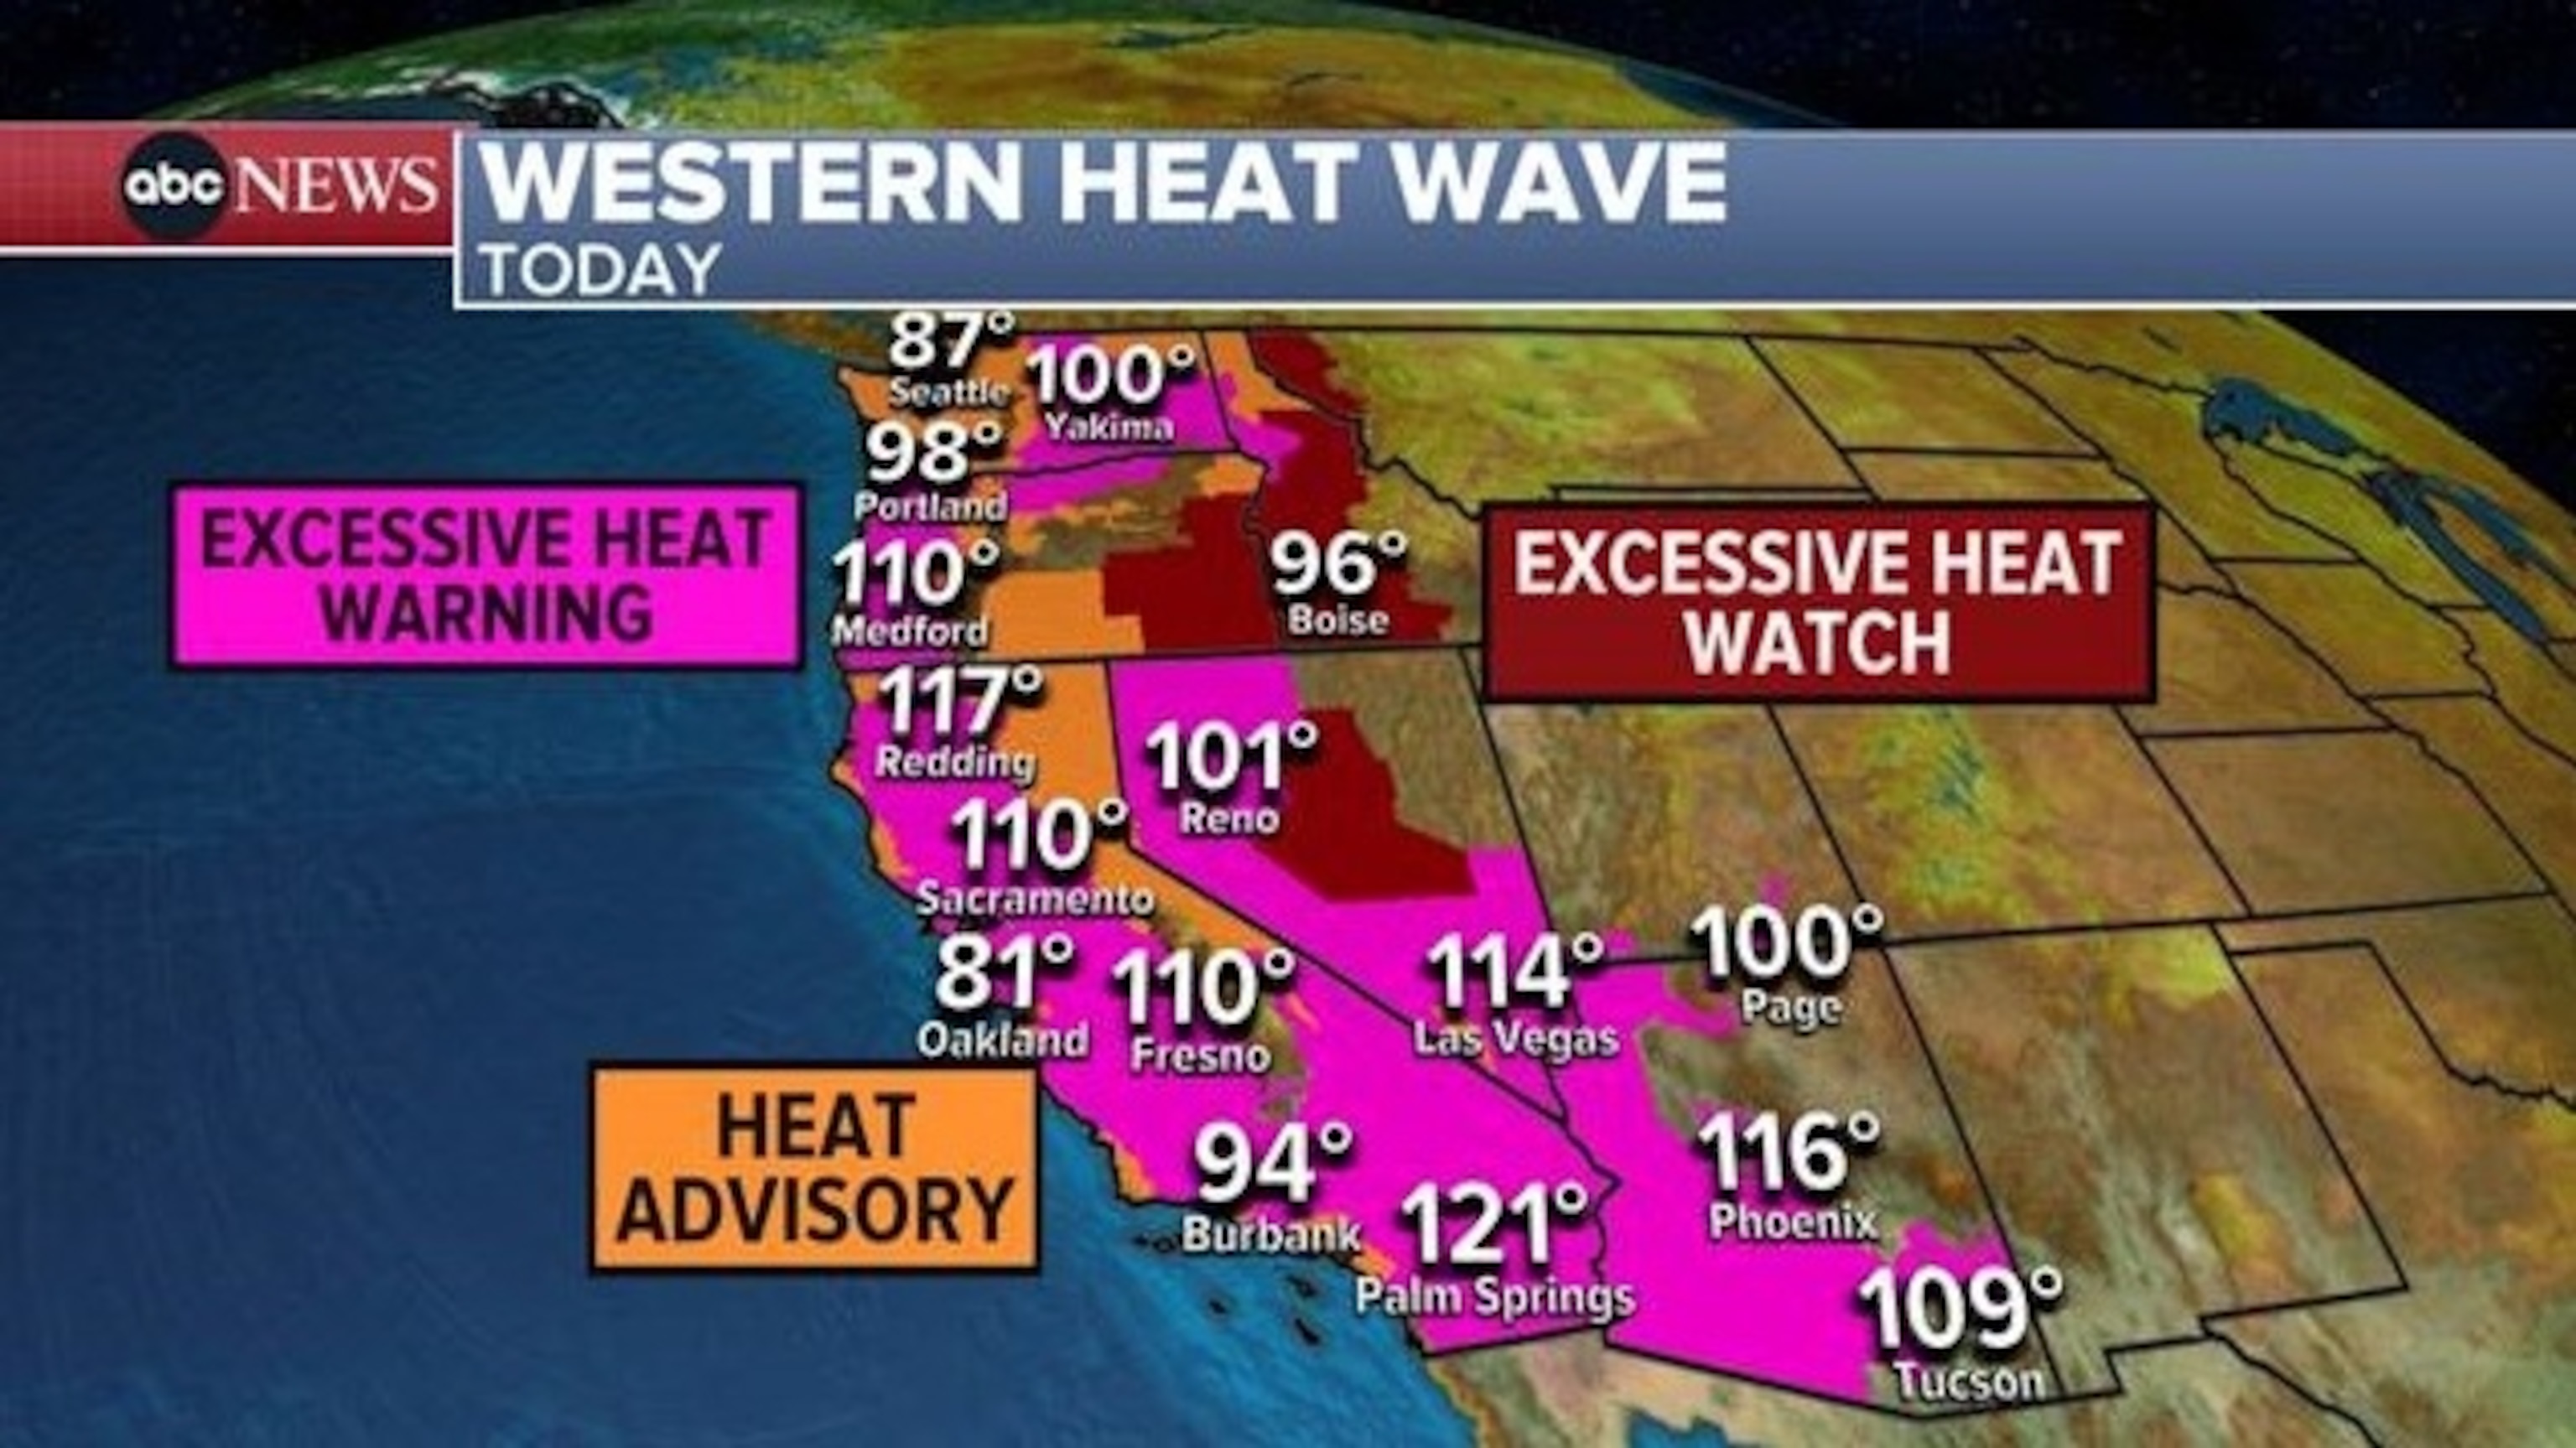 PHOTO: Western heat wave weather map